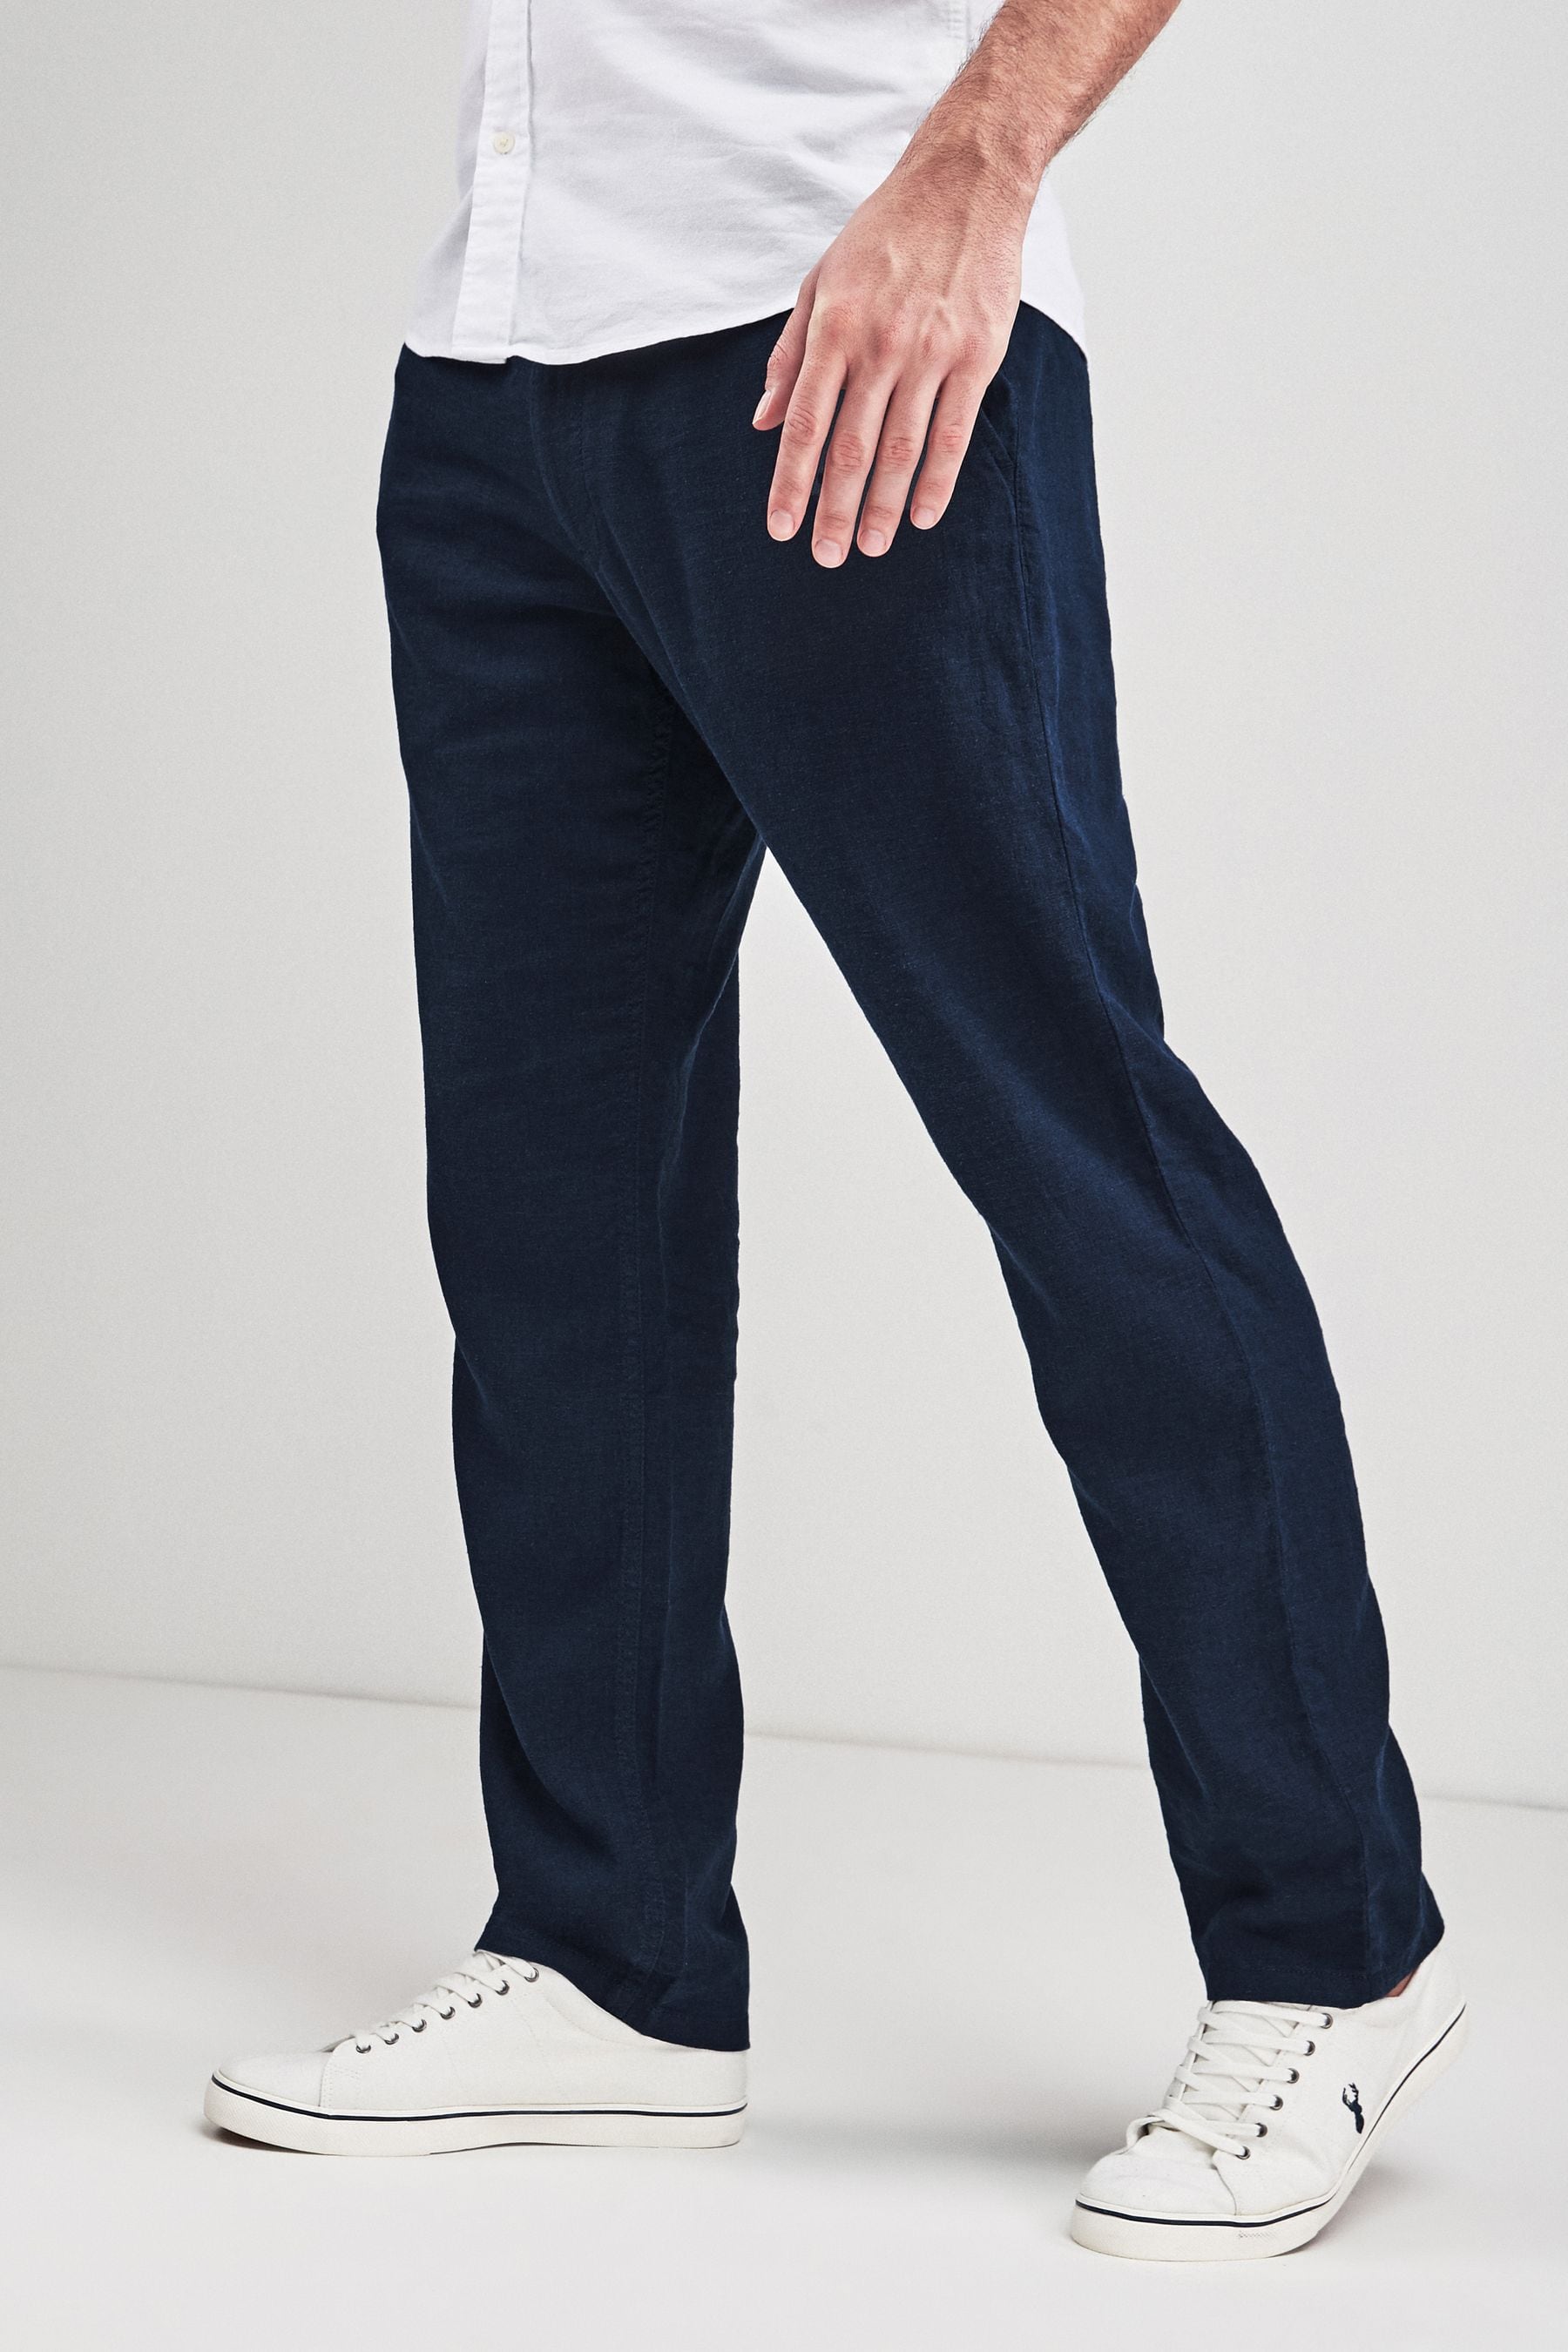 Hemp Pants 100% Hemp Drawstring Trousers Mens Clothing Hemp Canvas Pants |  eBay